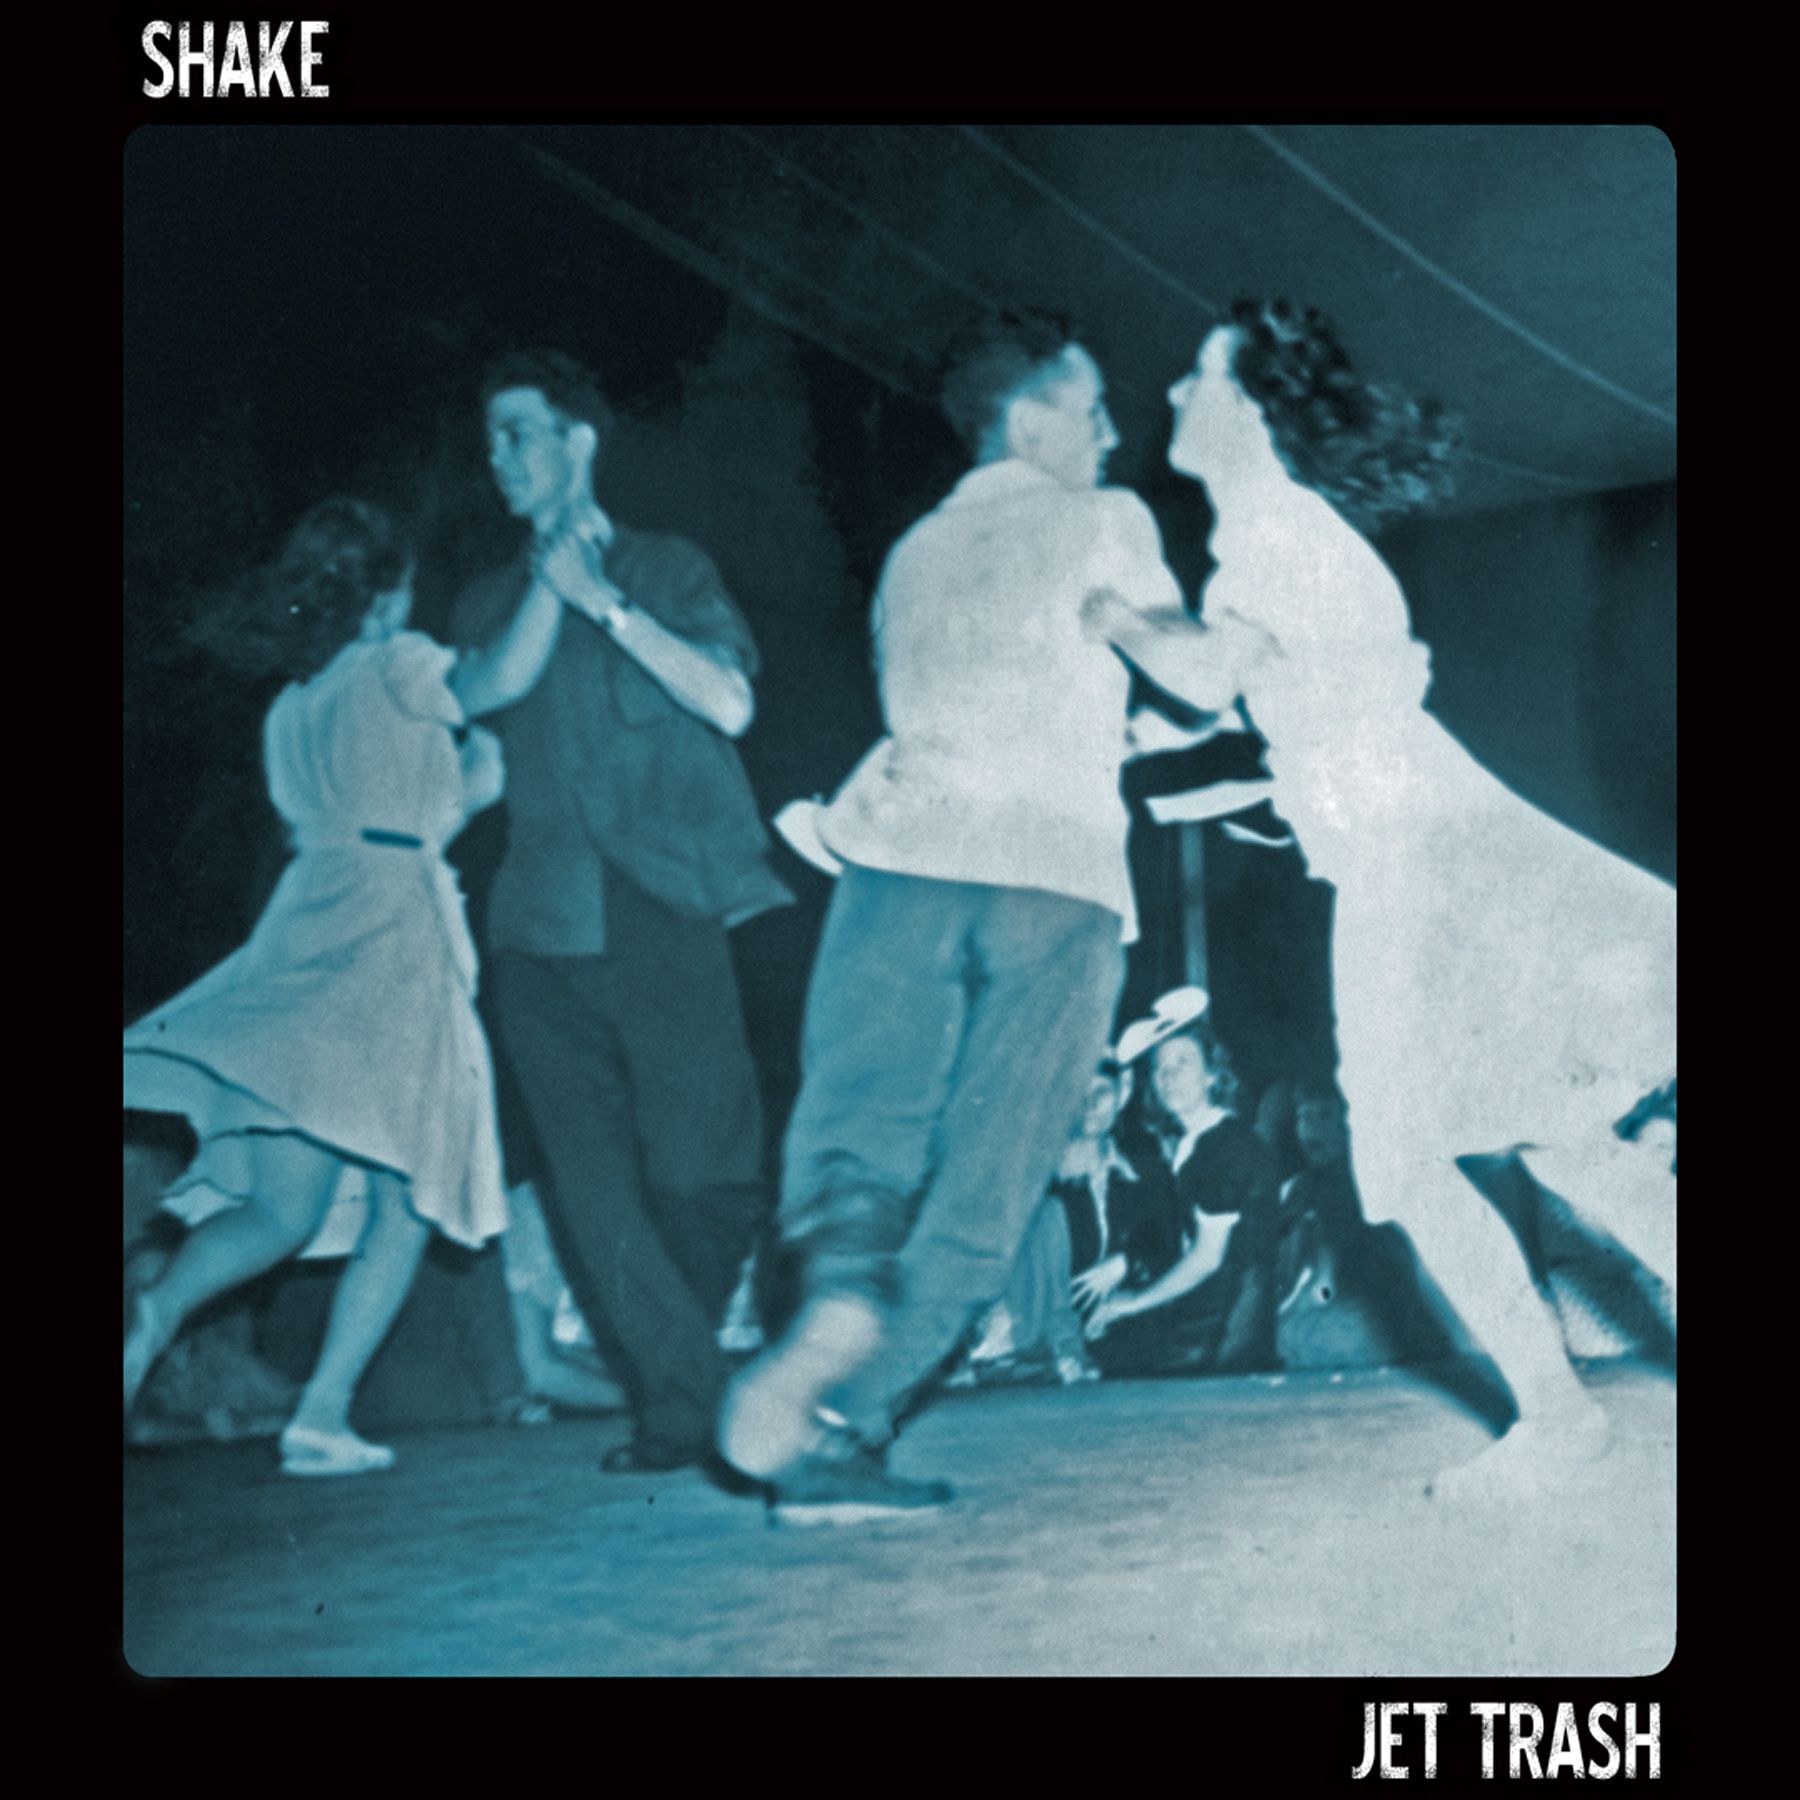  Jet Trash announce new Shake EP, share rattling title track    listen